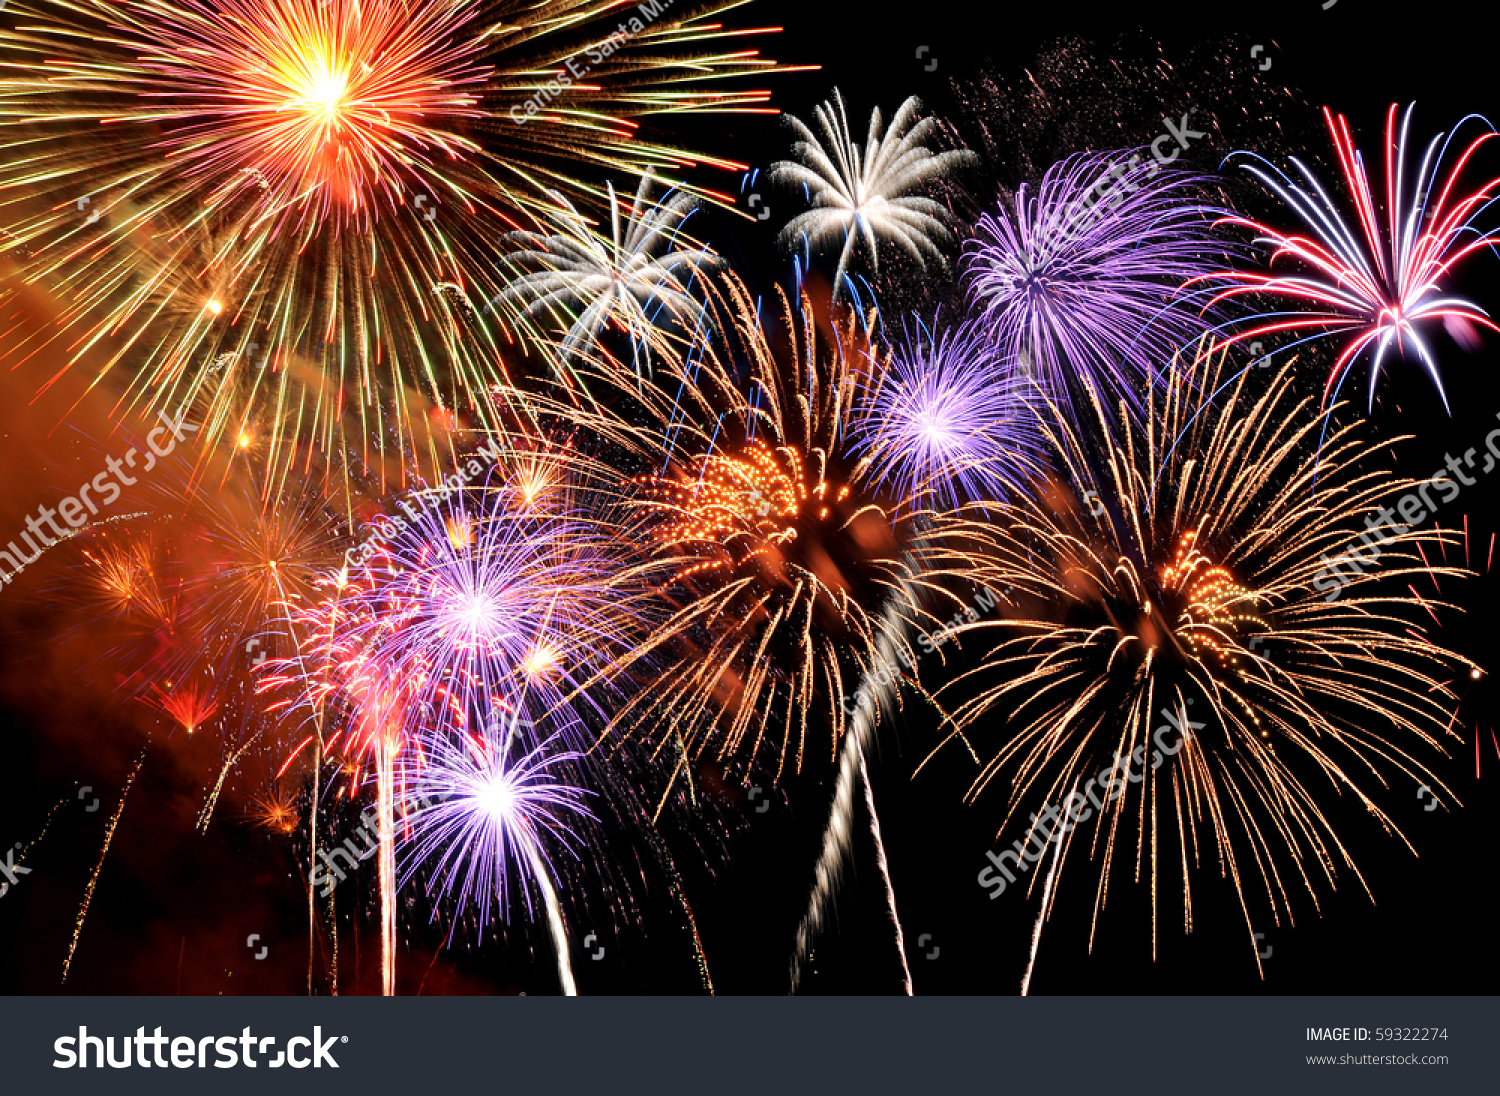 Fireworks of various colors bursting against a black background #59322274